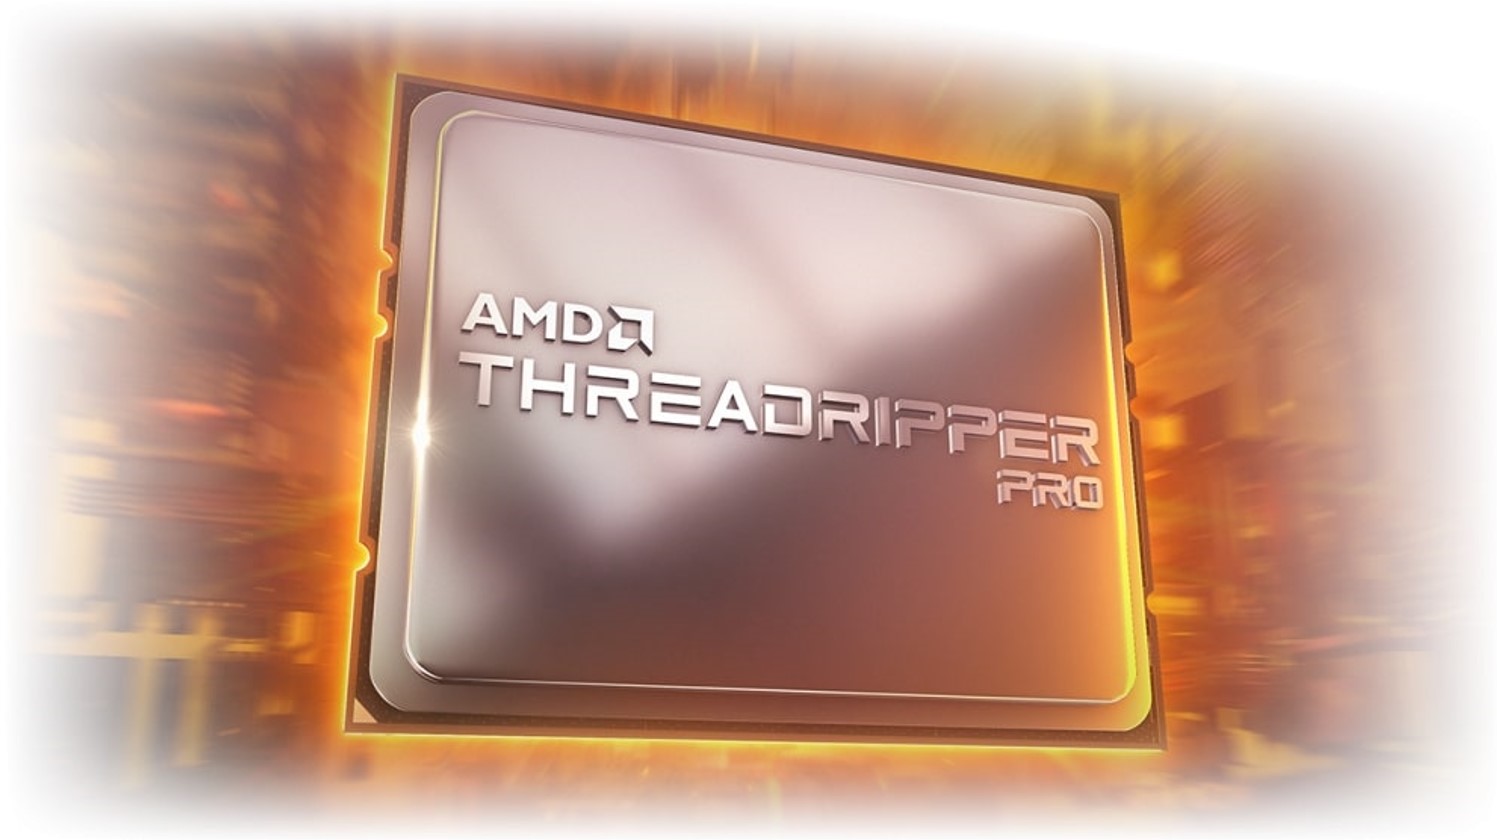 AMD Threadripper Pro 5000